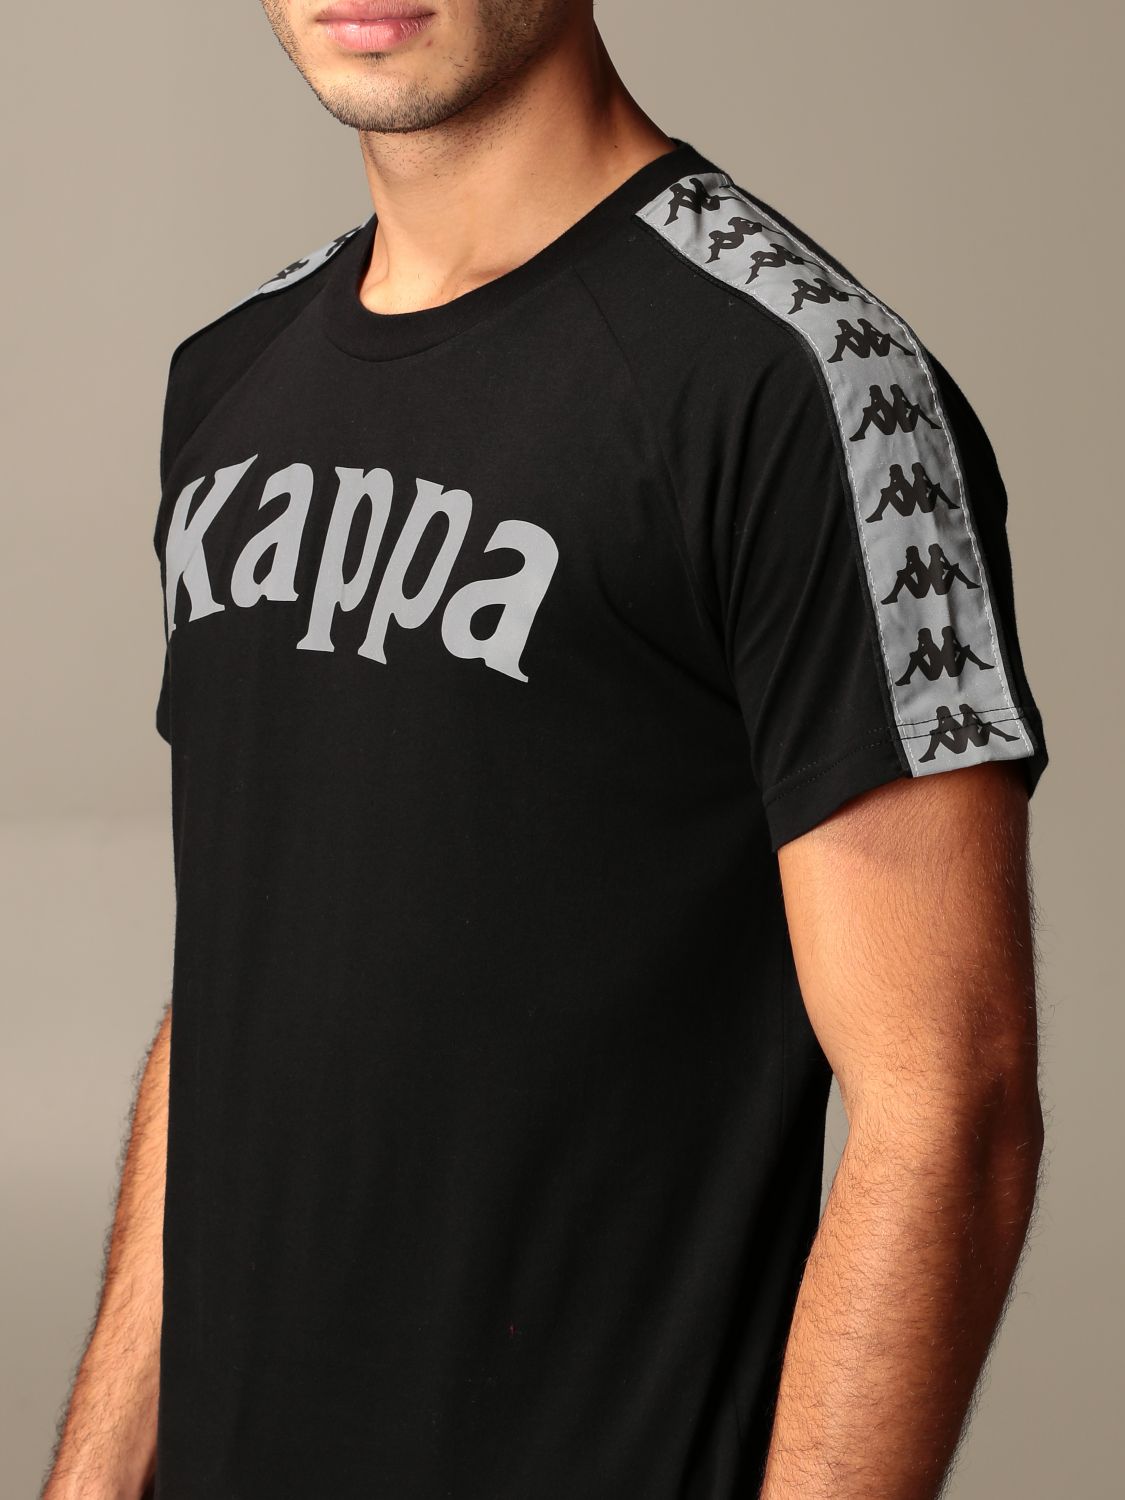 kappa logo shirt